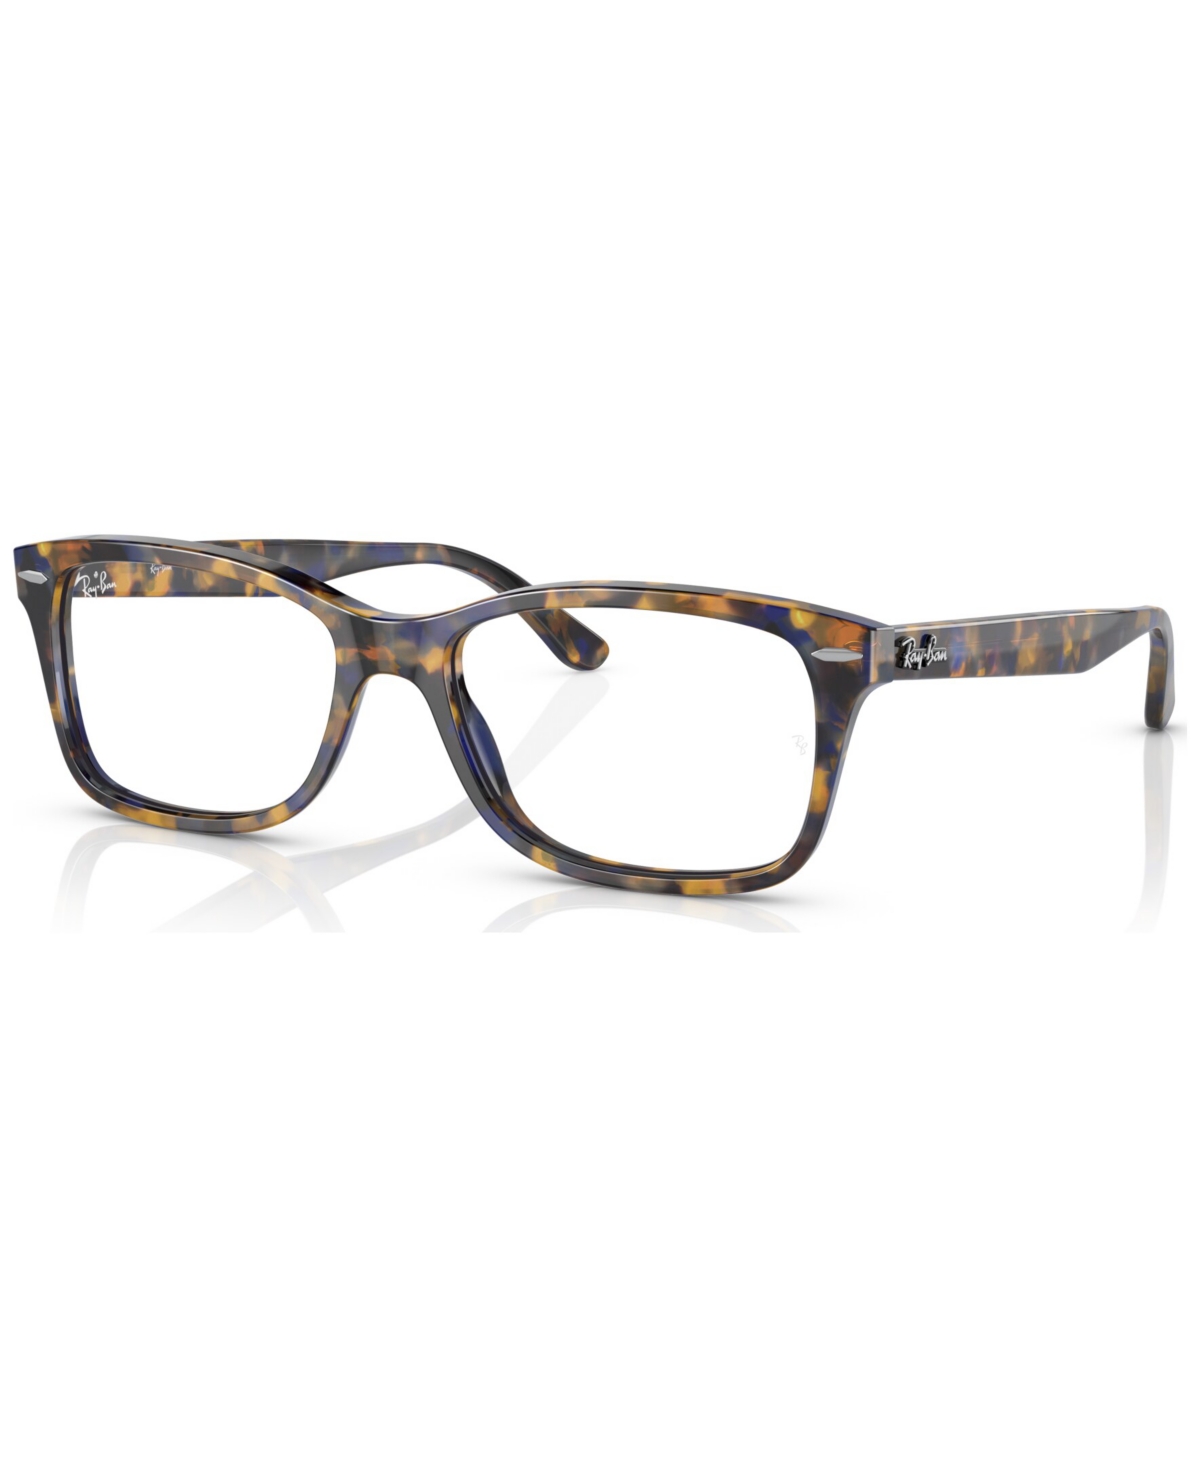 Unisex Square Eyeglasses, RX542850-o - Red